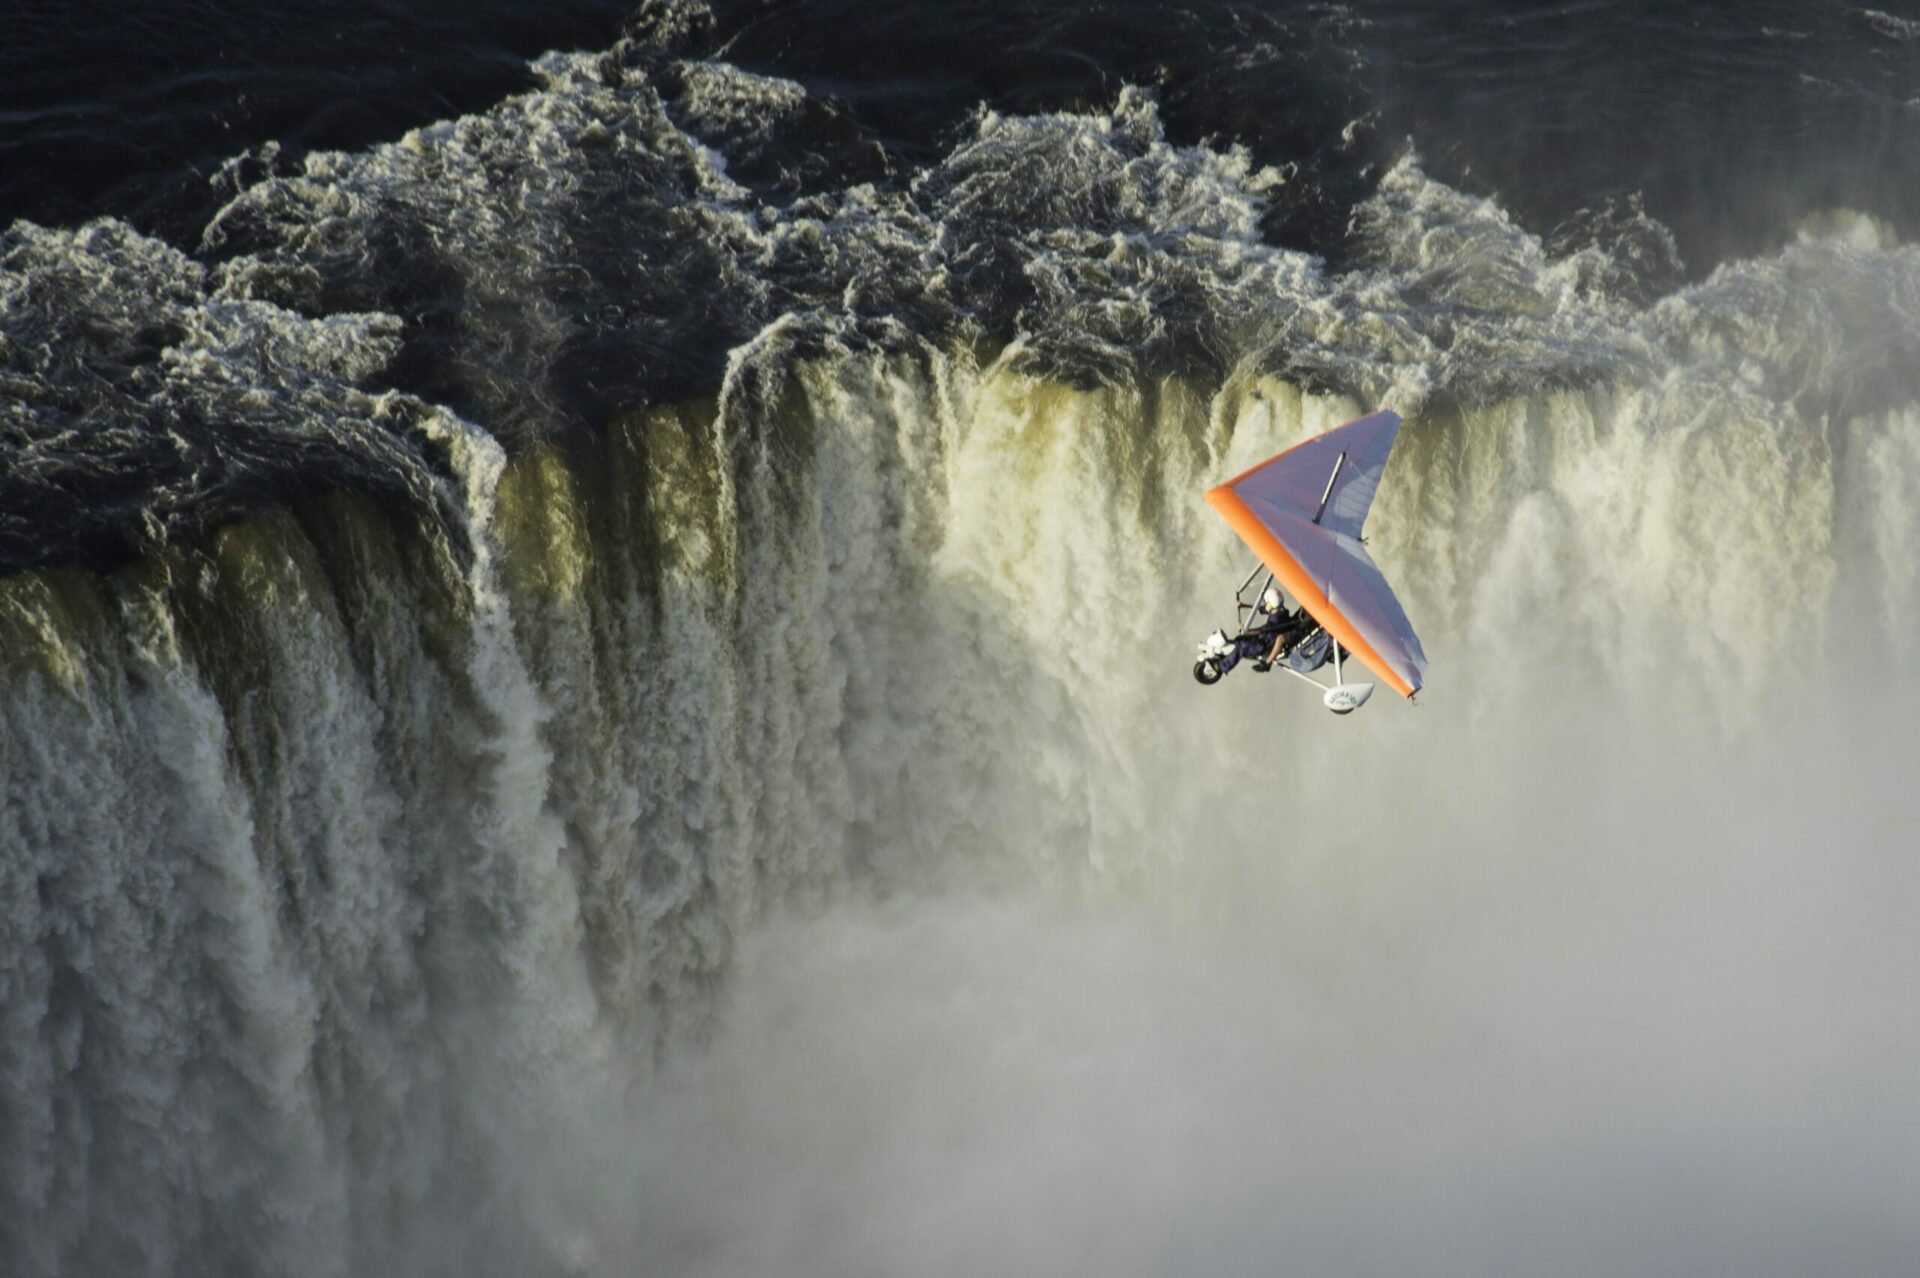 microlight flight over large waterfalls